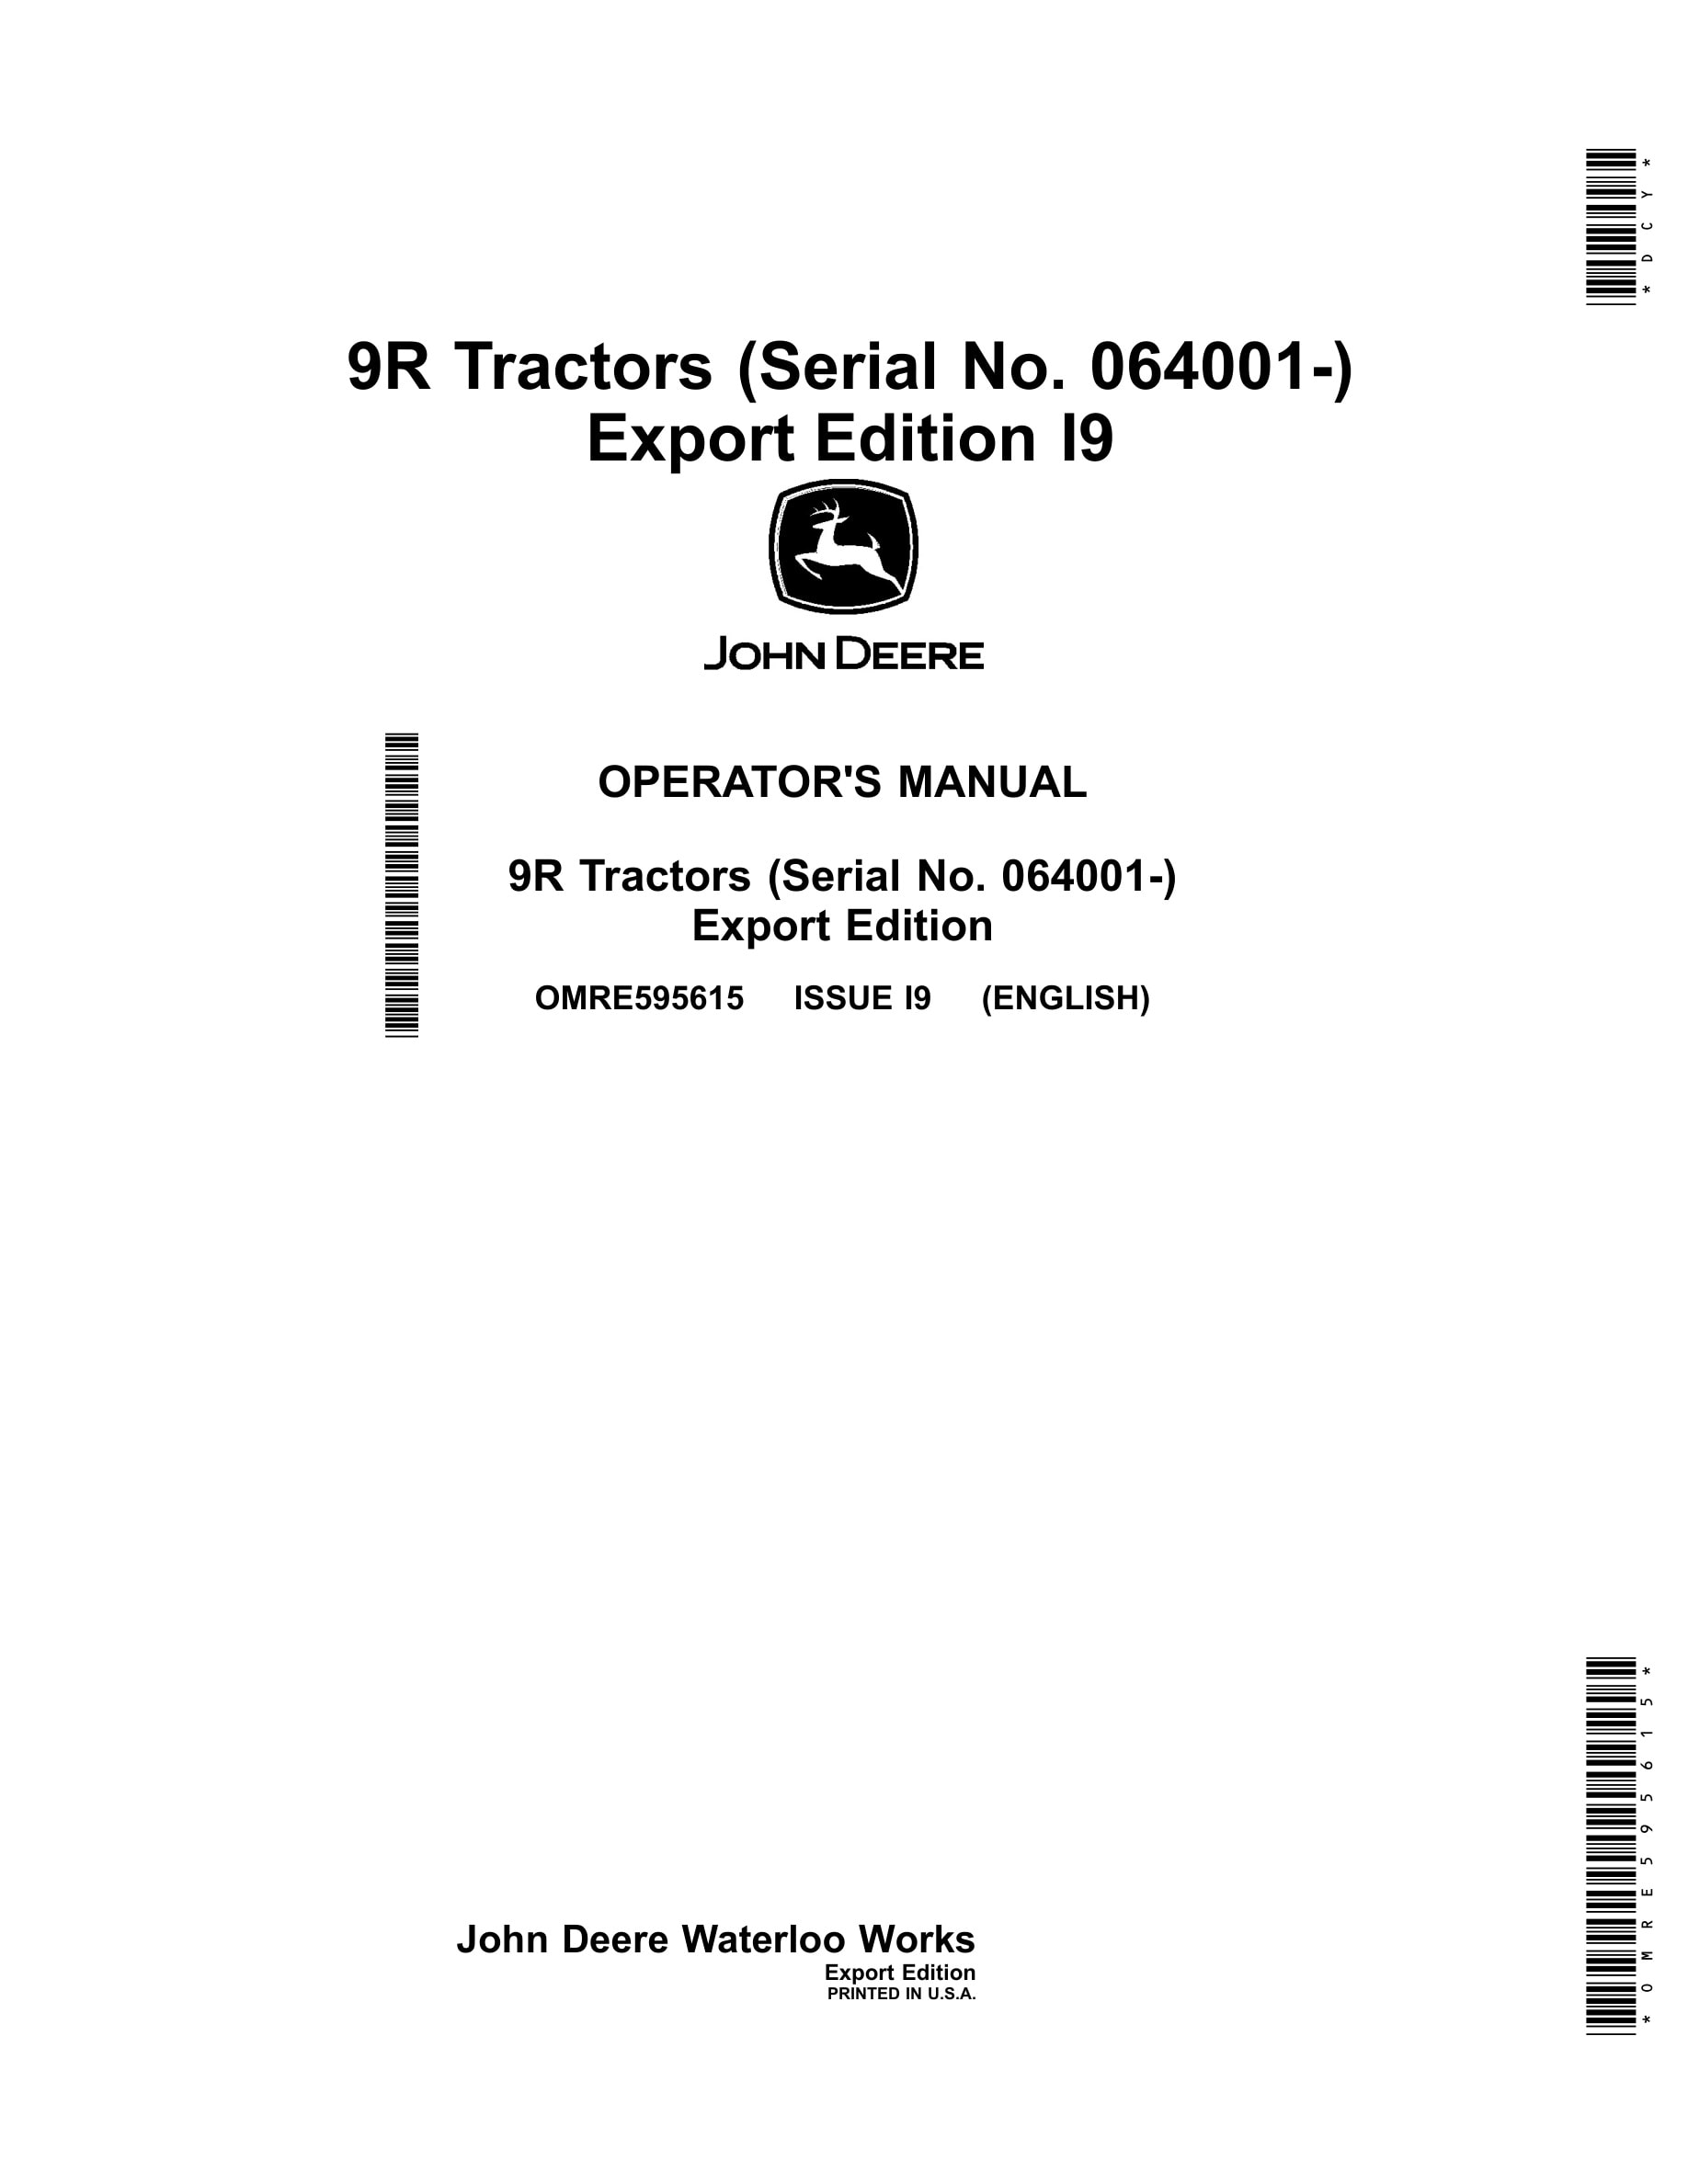 John Deere 9r Tractors Operator Manuals OMRE595615-1